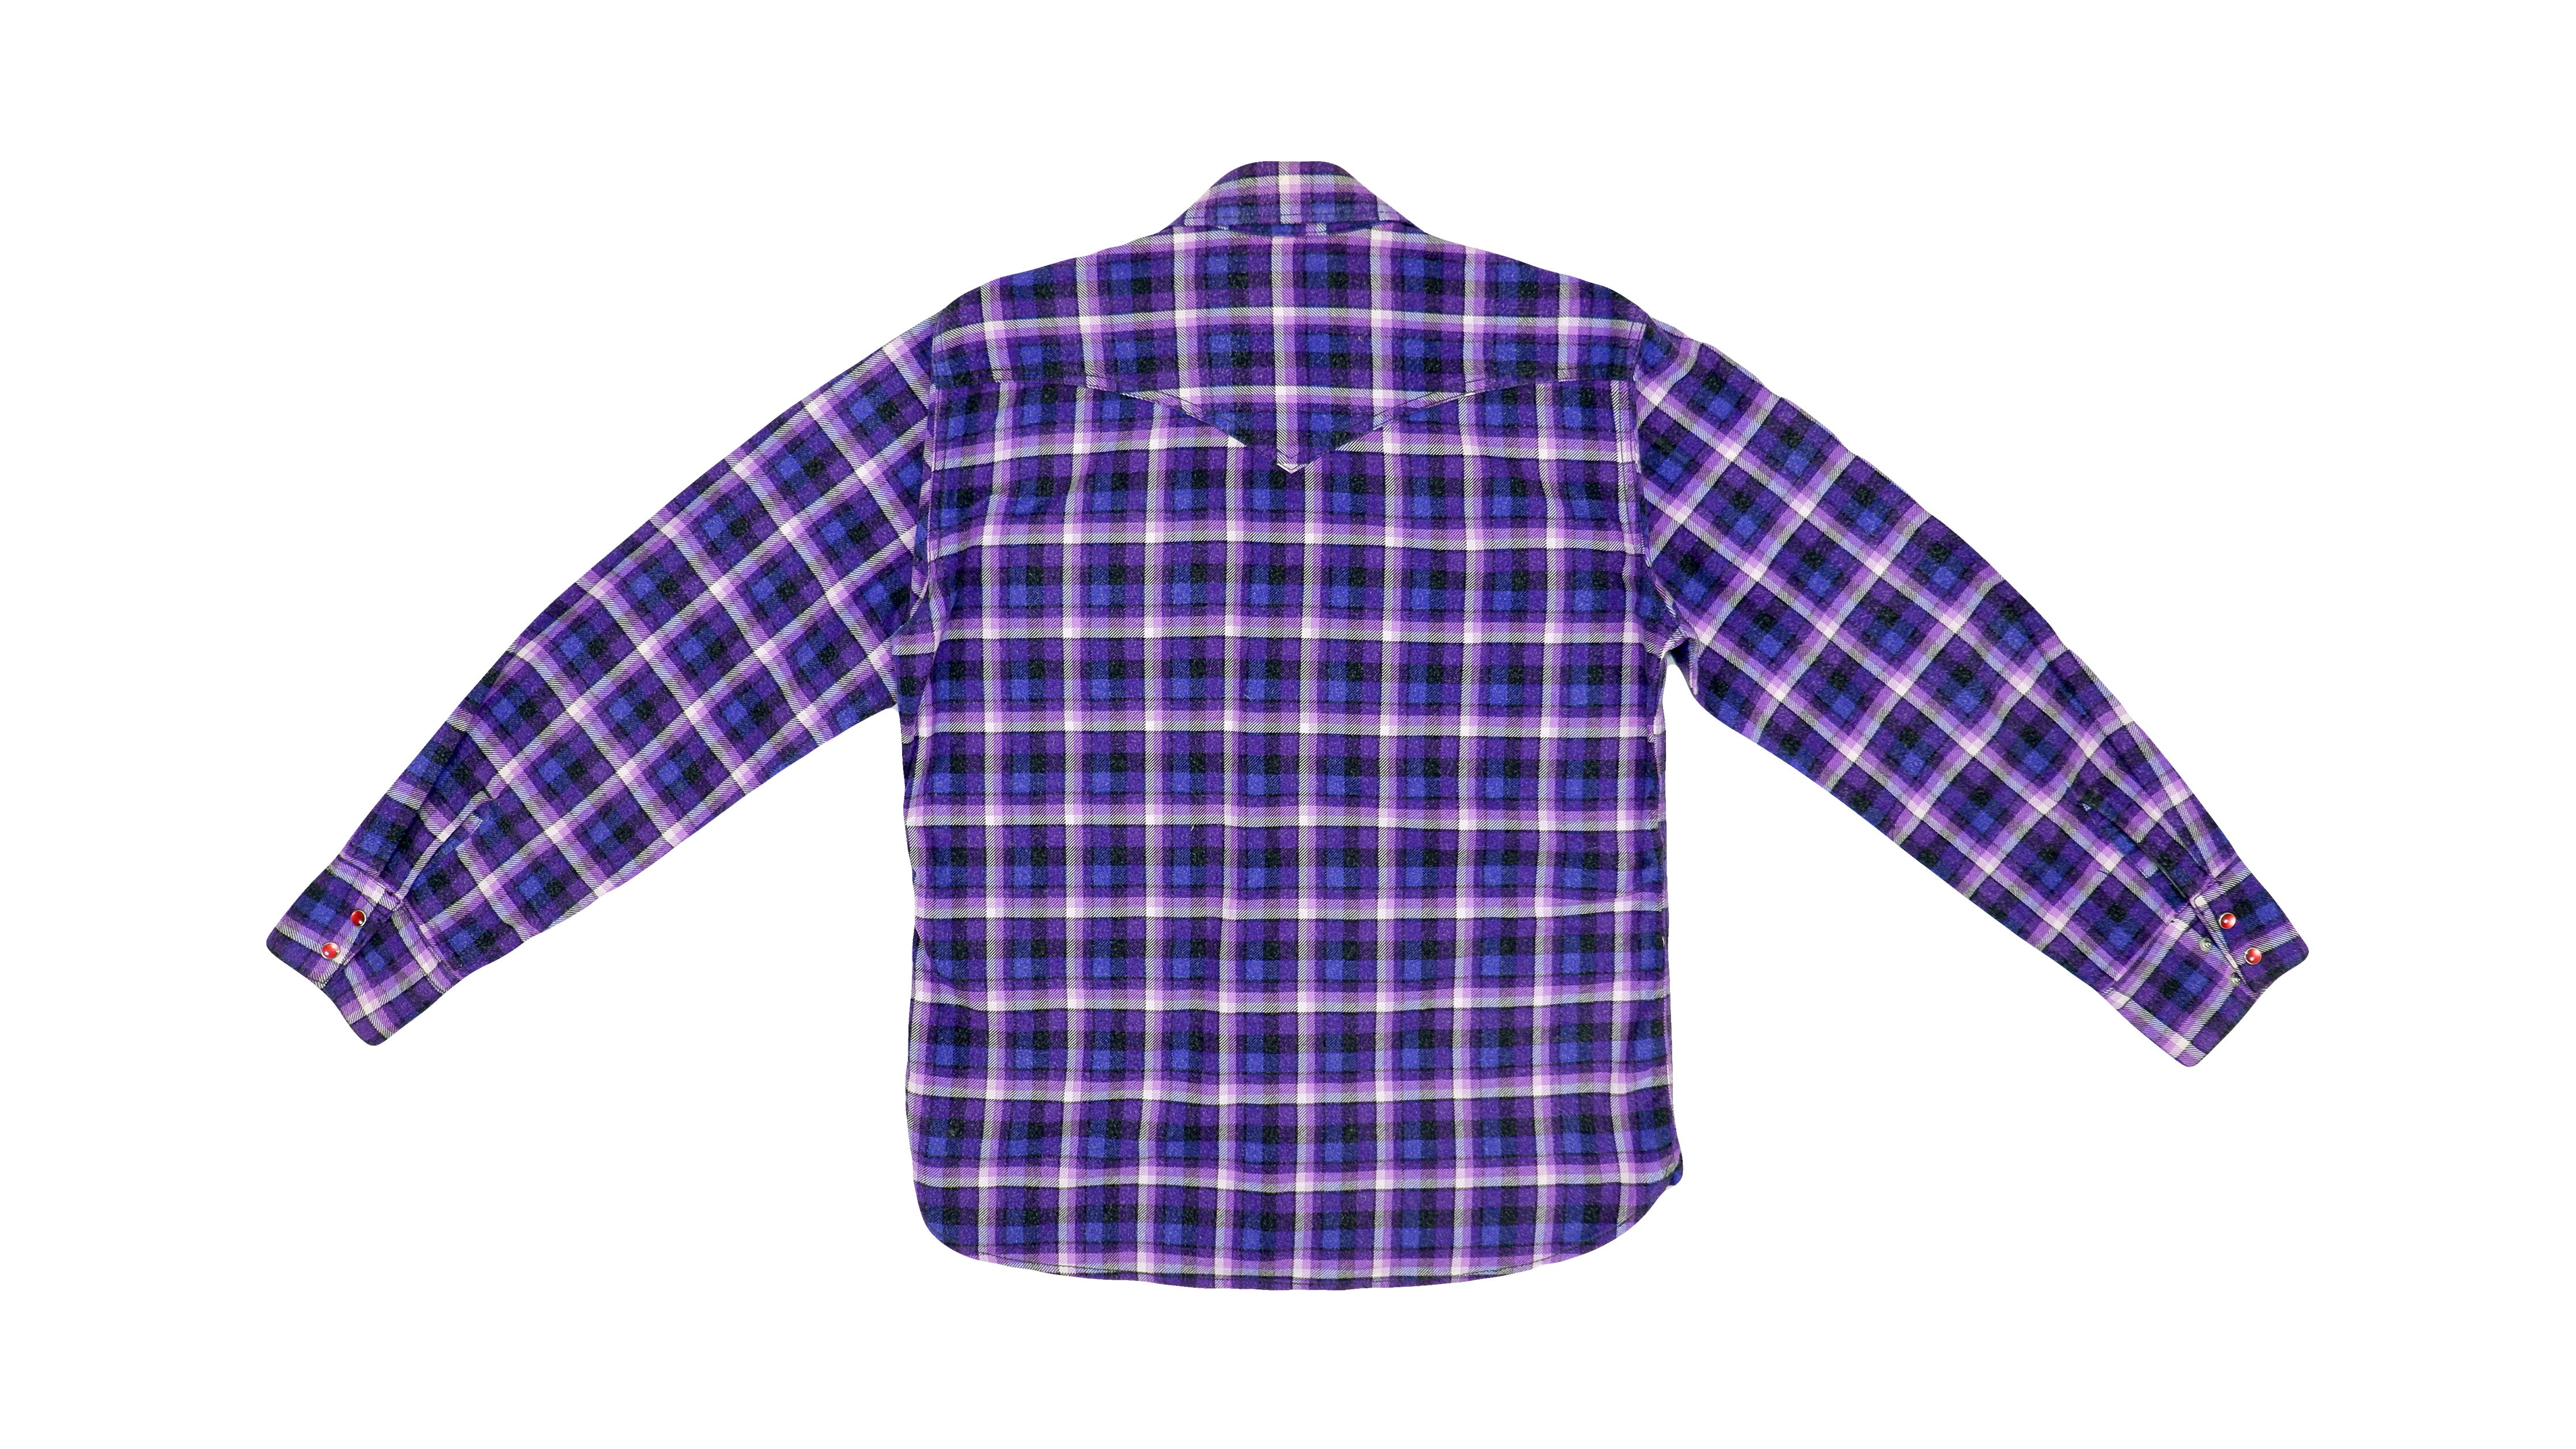 Levi's Men's Purple Clothing